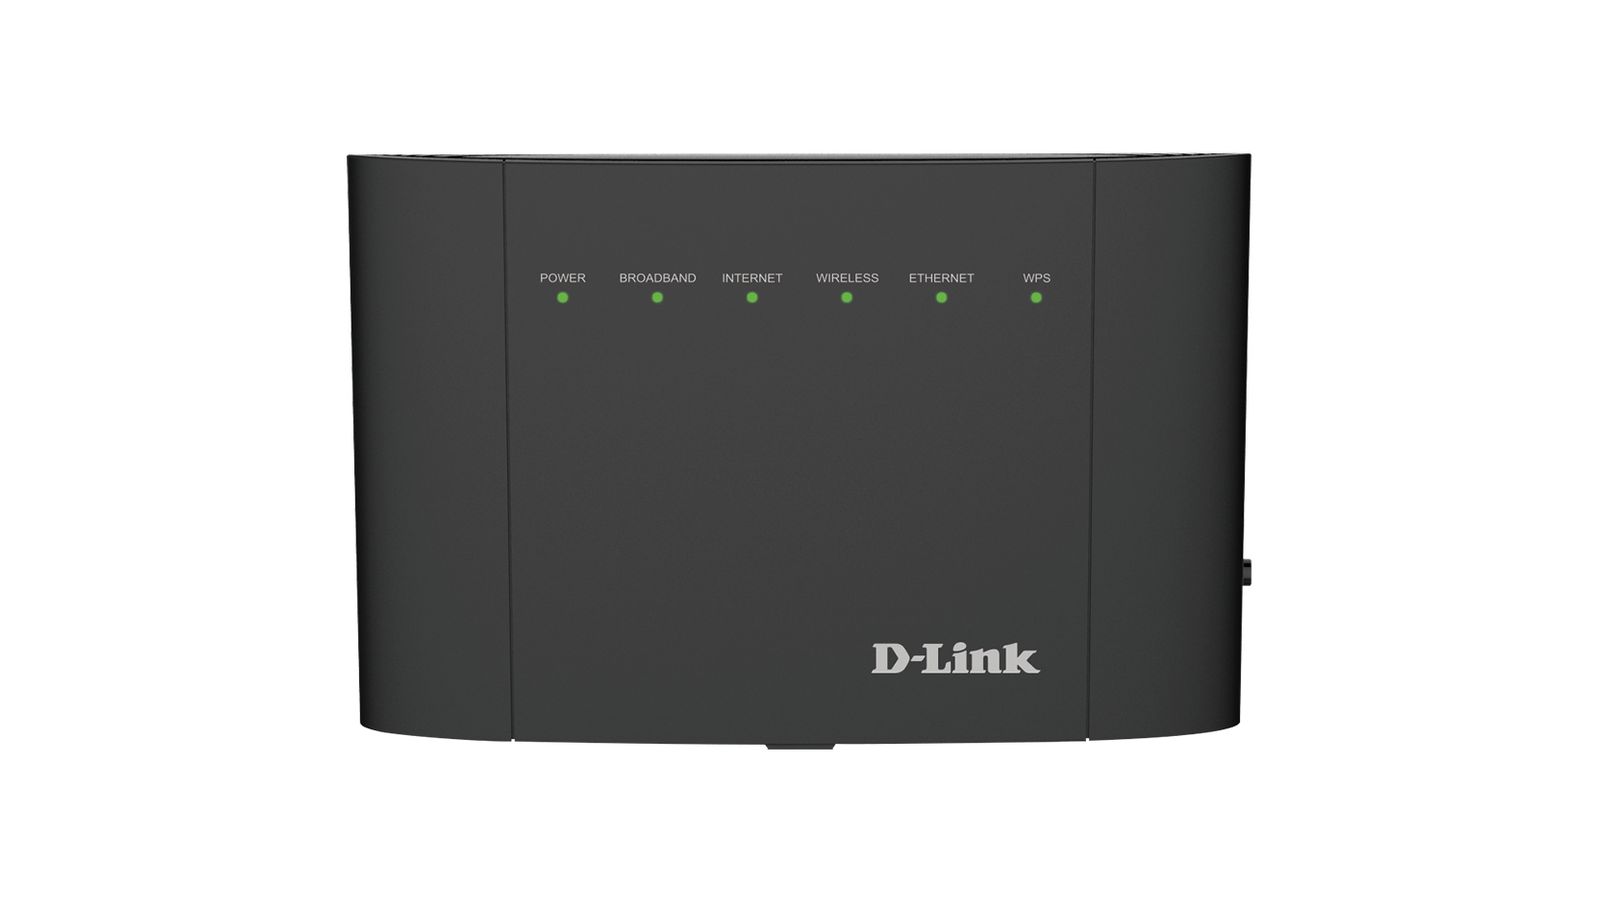 D-Link DSL-3785 Wireless Dual Band Gigabit Ethernet Modem Router Annex A